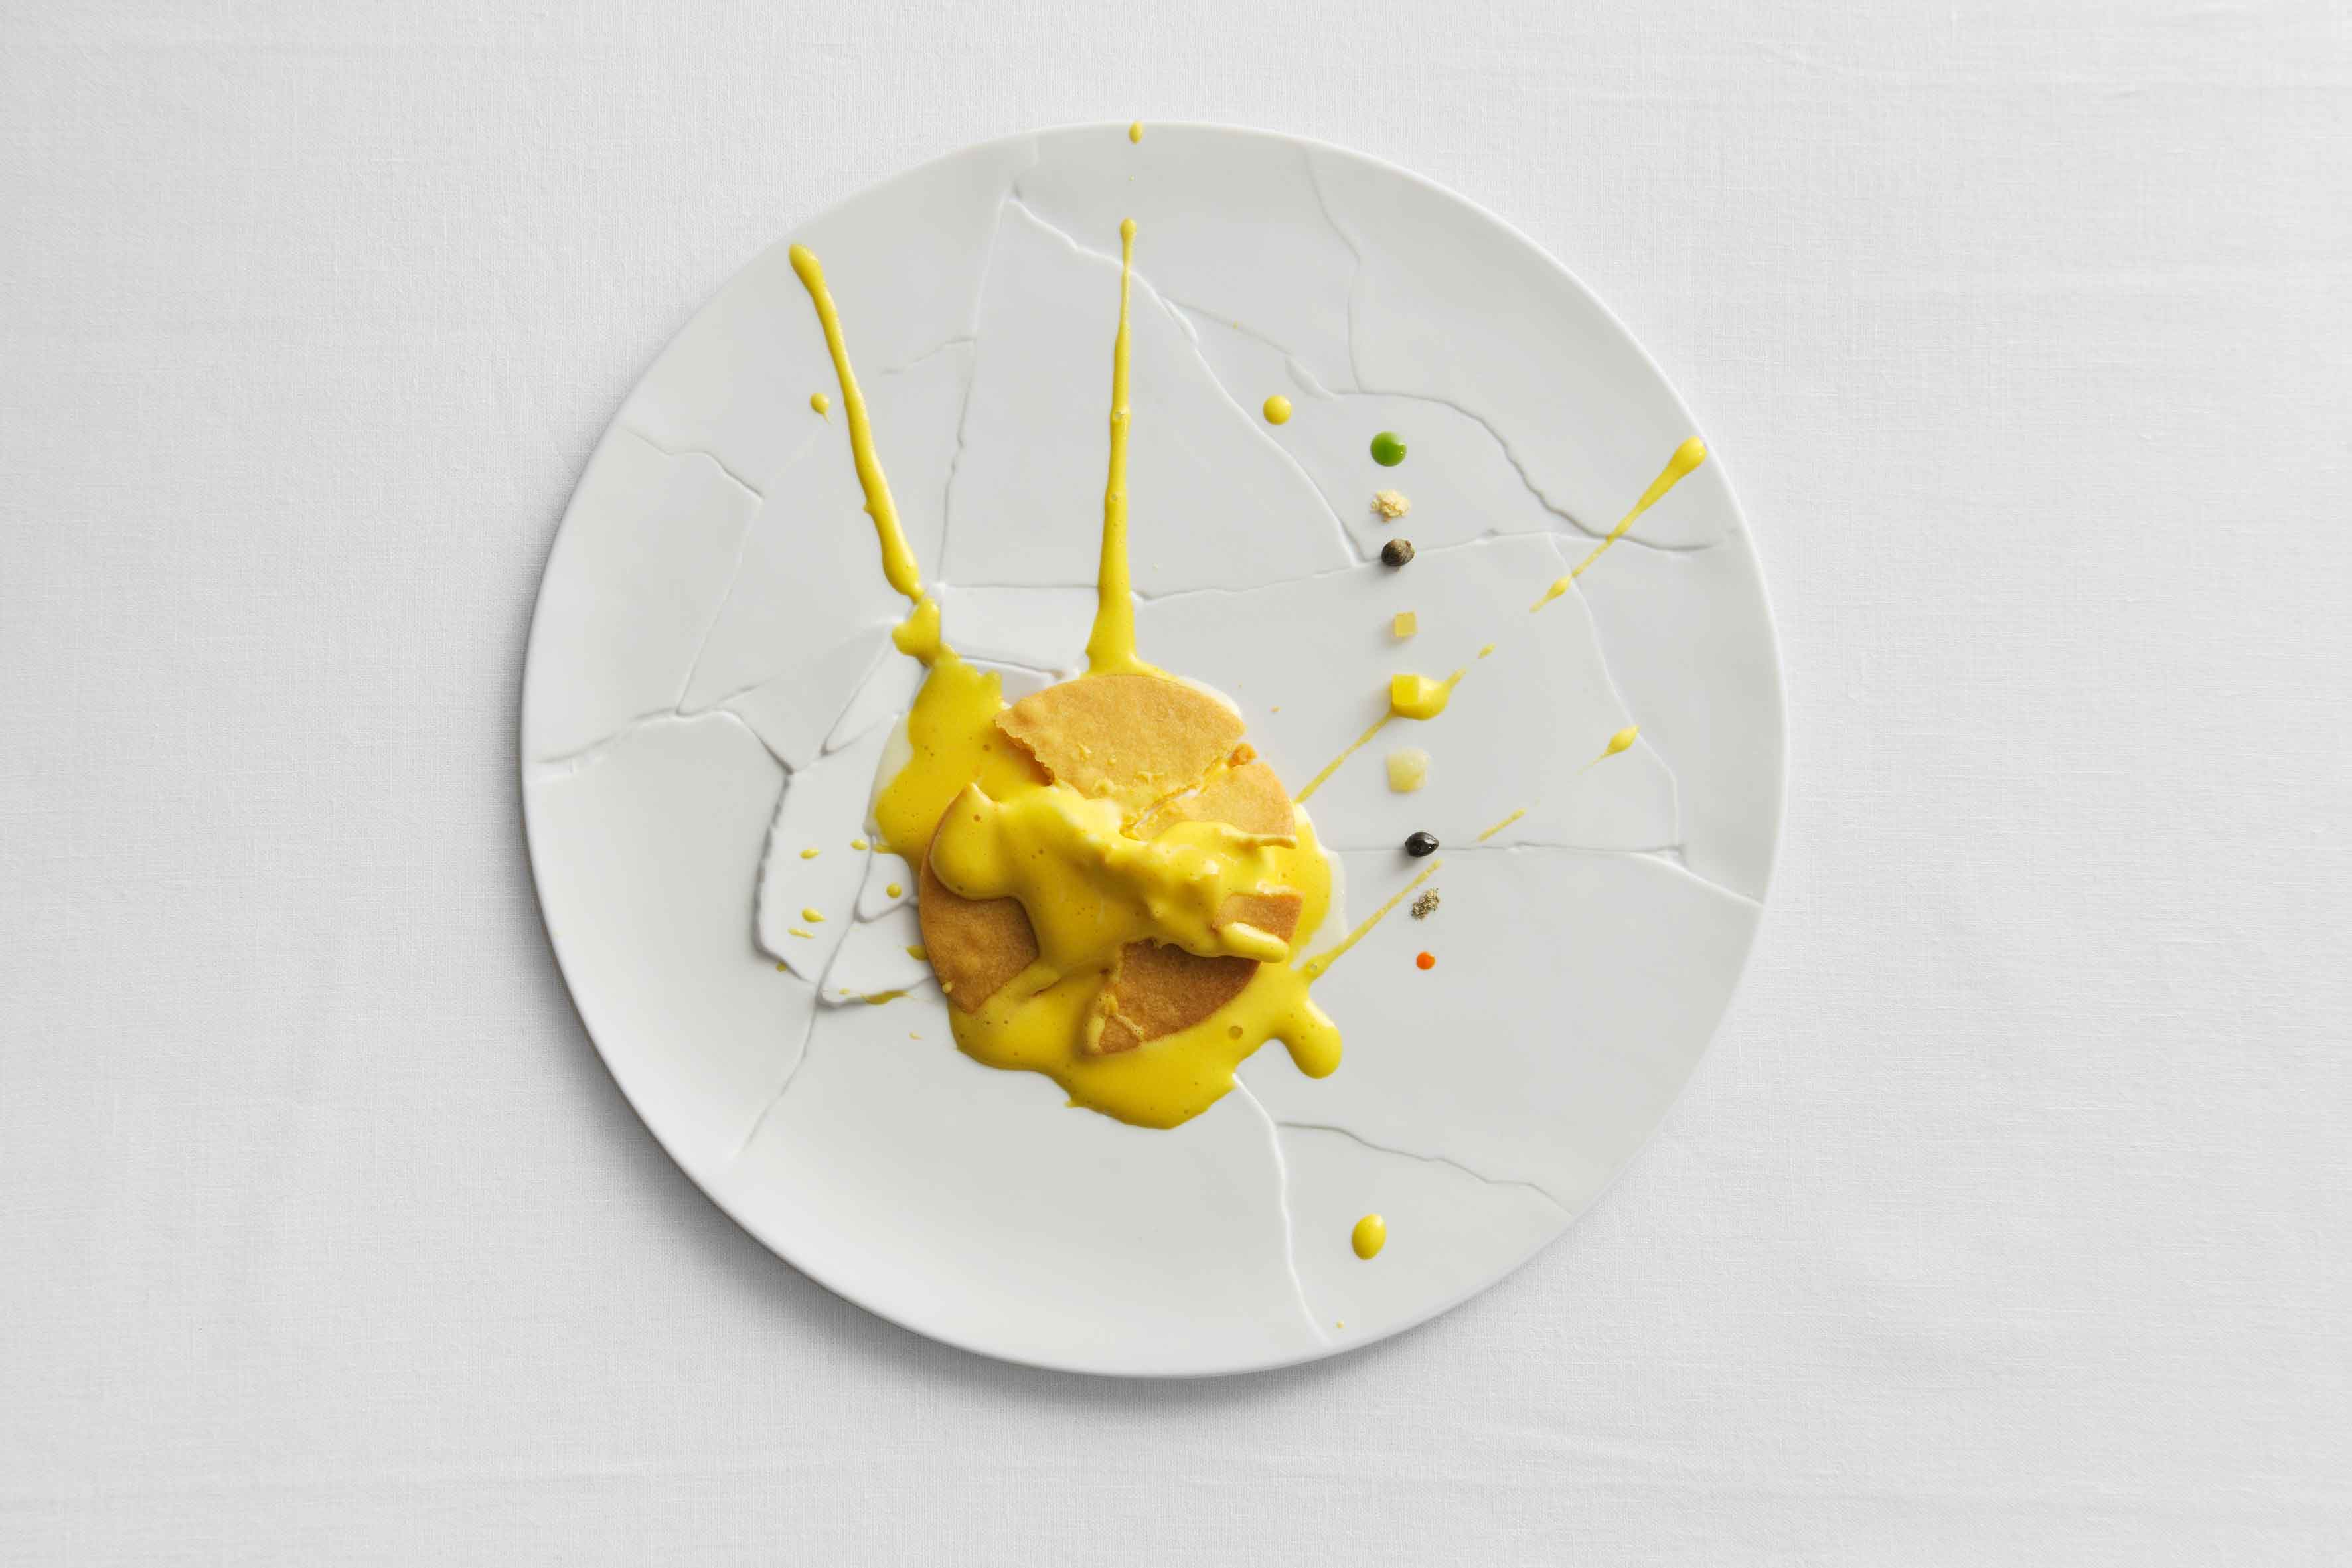 Massimo Bottura's Oops! I dropped the lemon tart. Photo by Paolo Terzi.